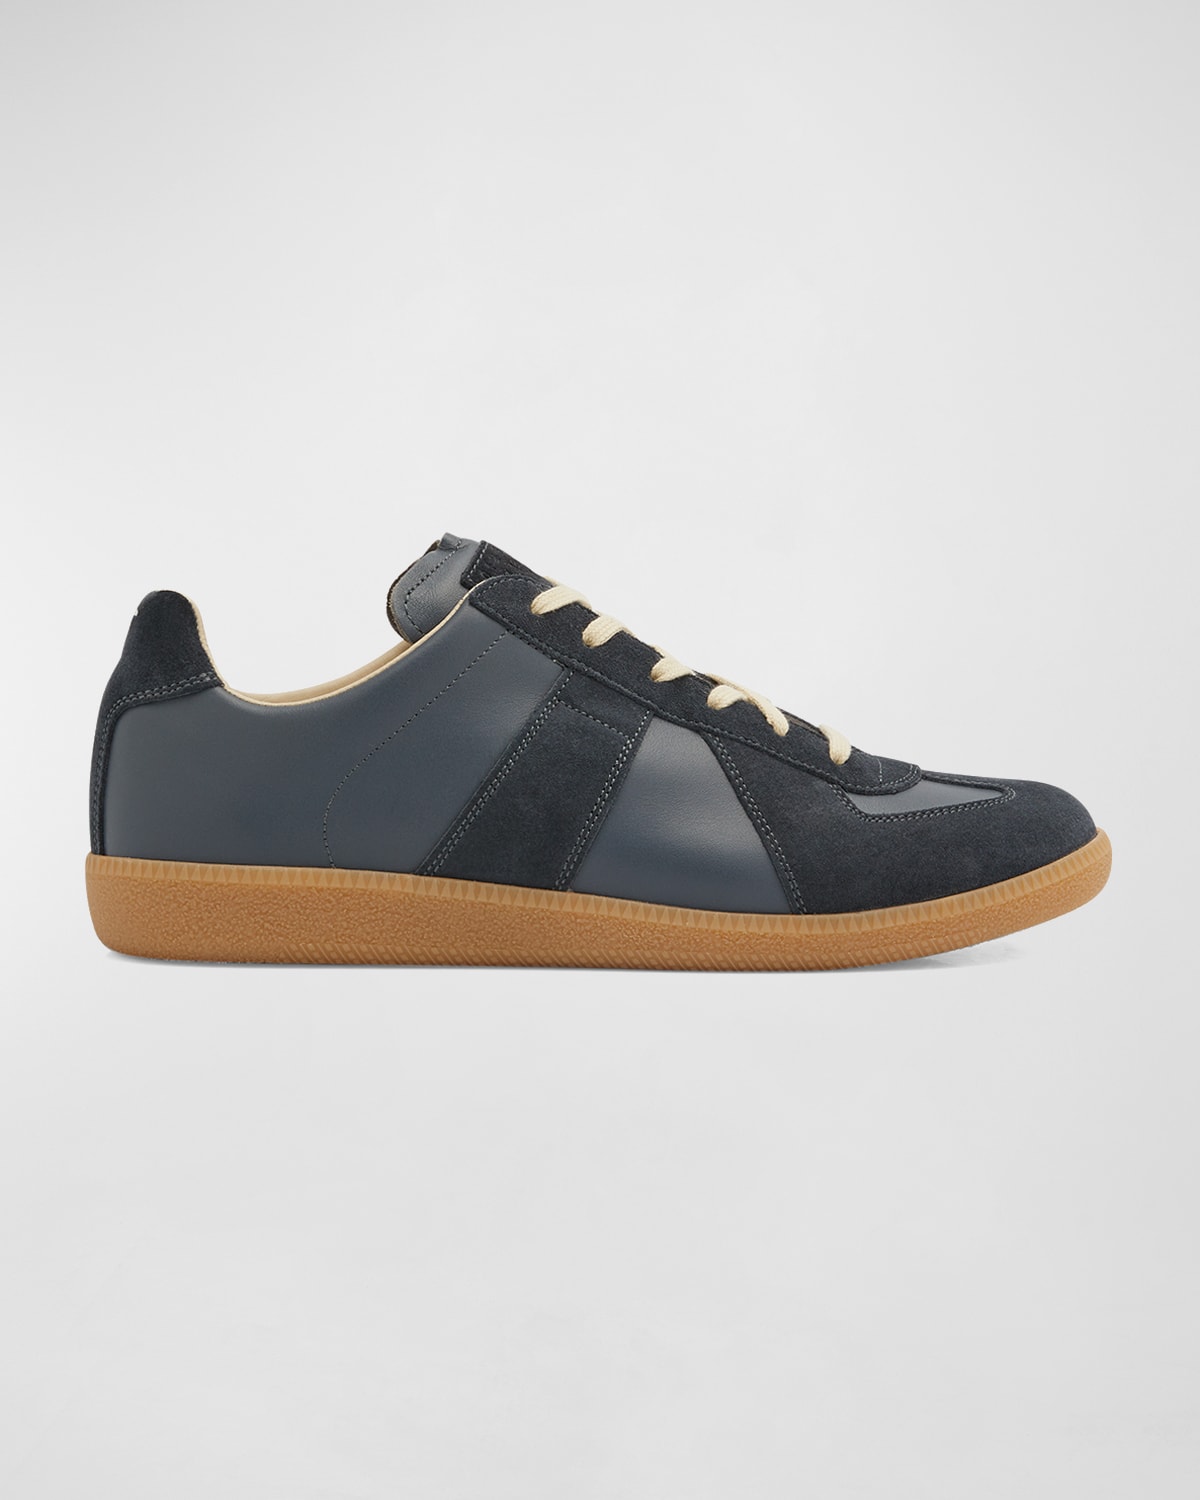 Maison Margiela Men's Replica Leather/Suede Low-Top Sneakers